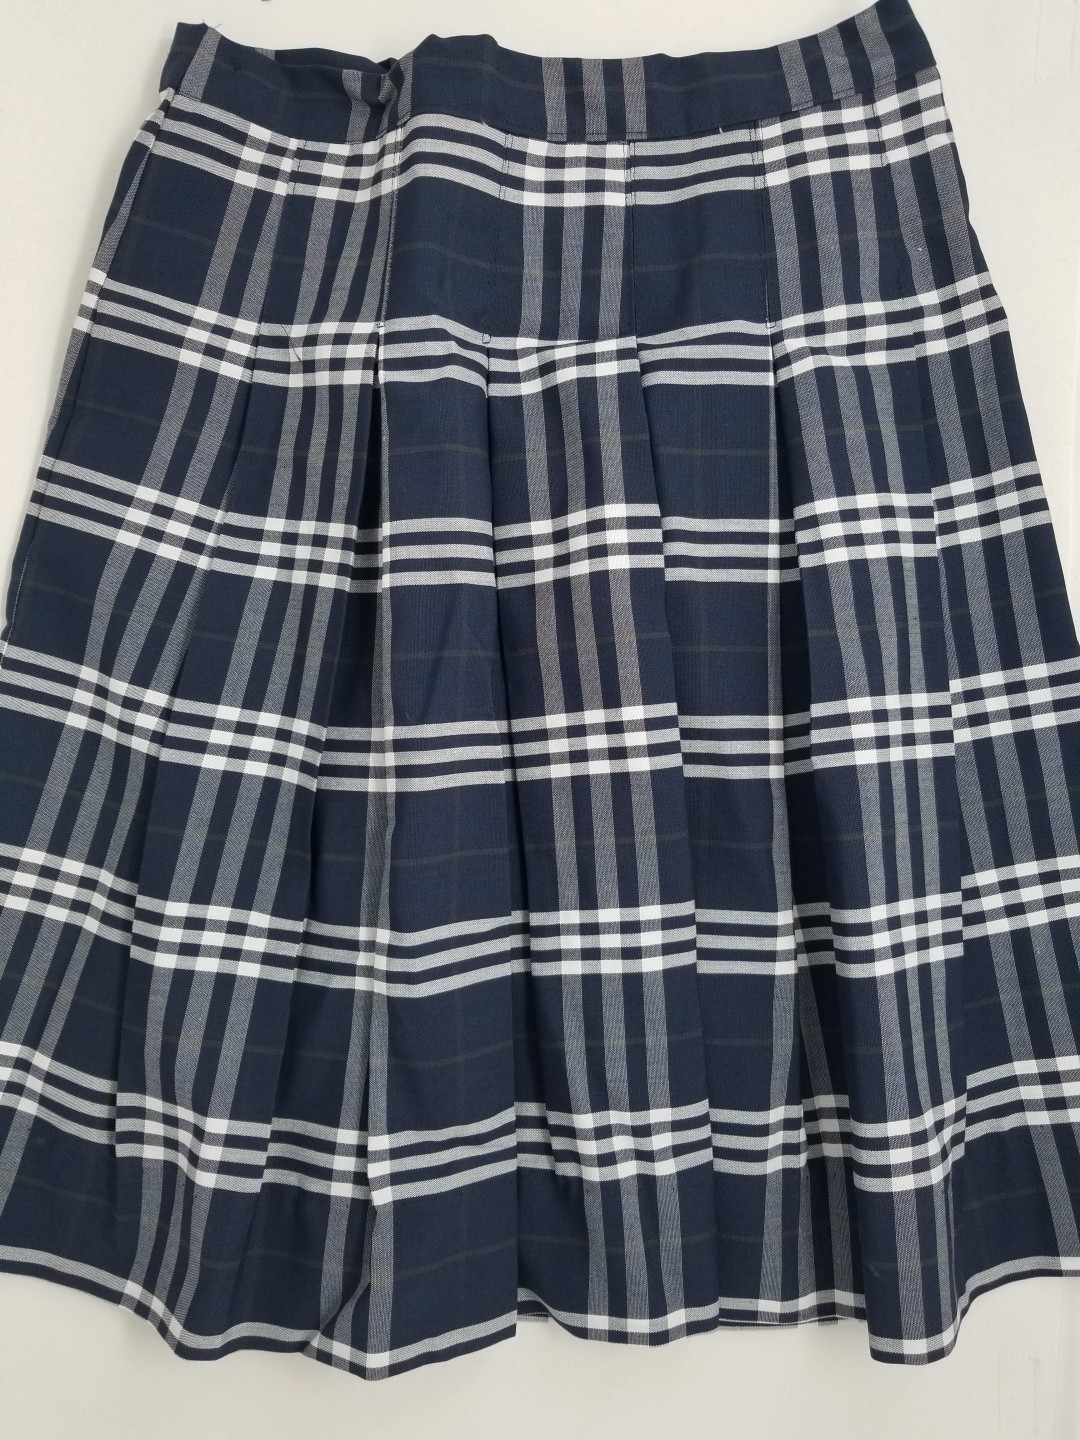 Stitch Down Pleat Skirt- Style 11-Plaid 35